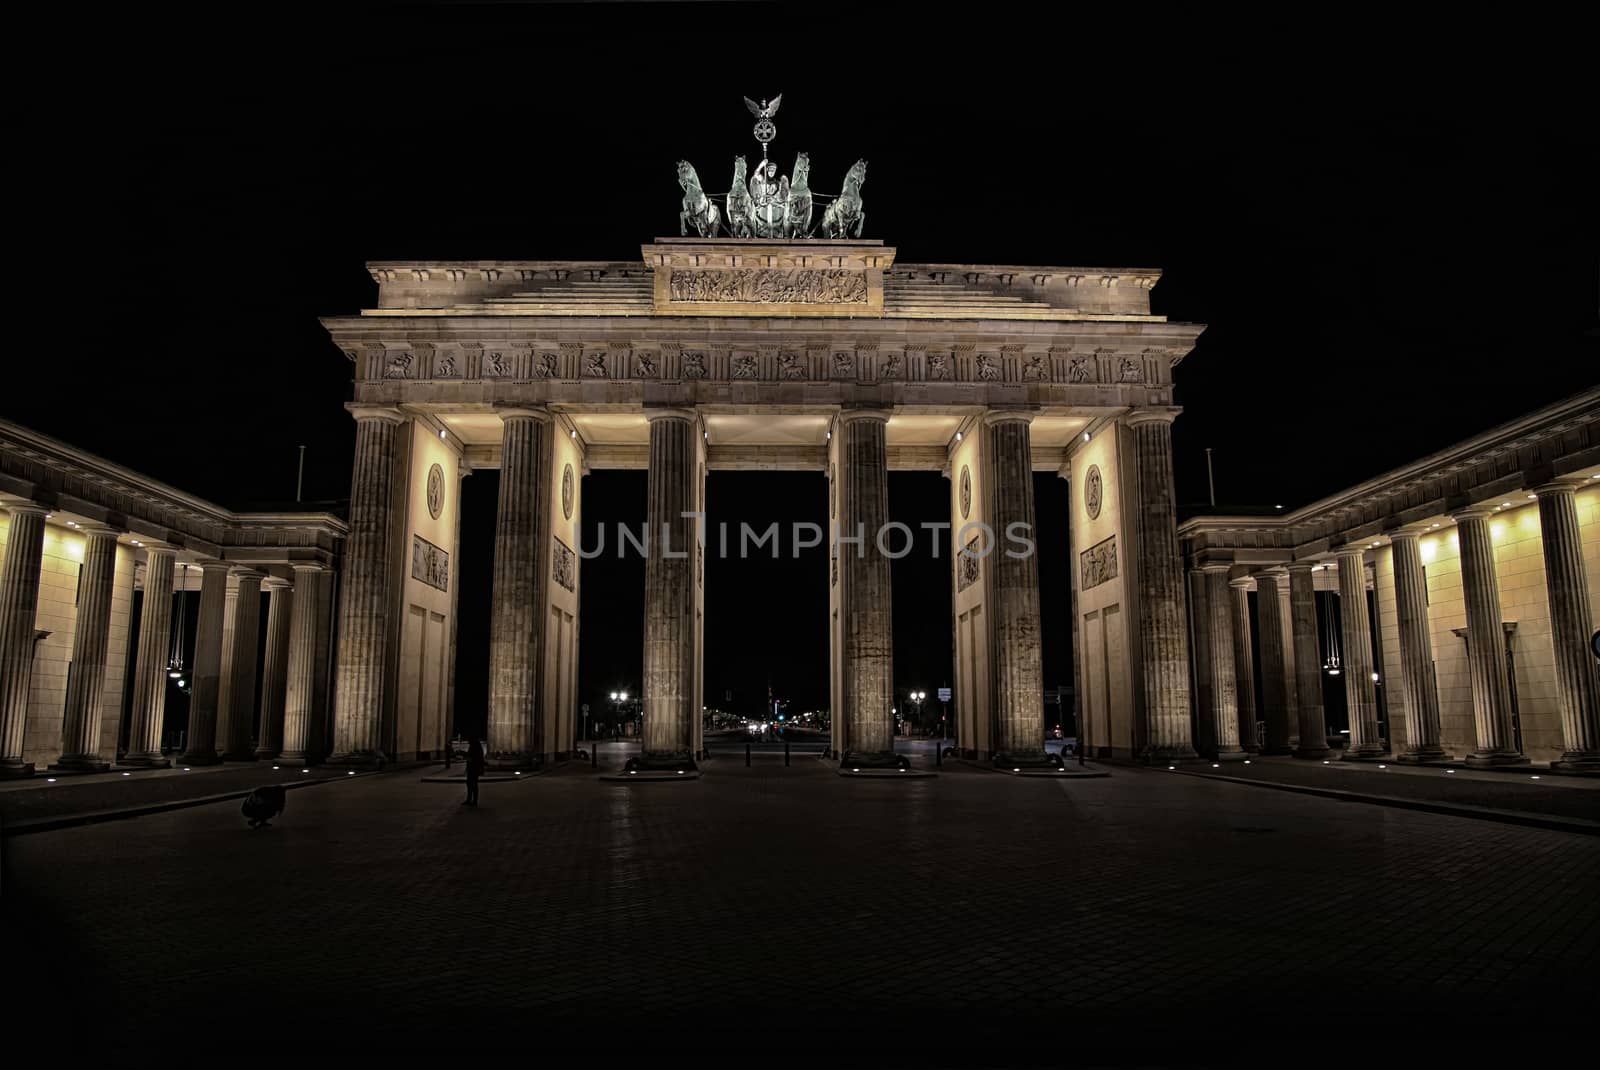 Brandenburg gate at night in Berlin, Germany by vladacanon